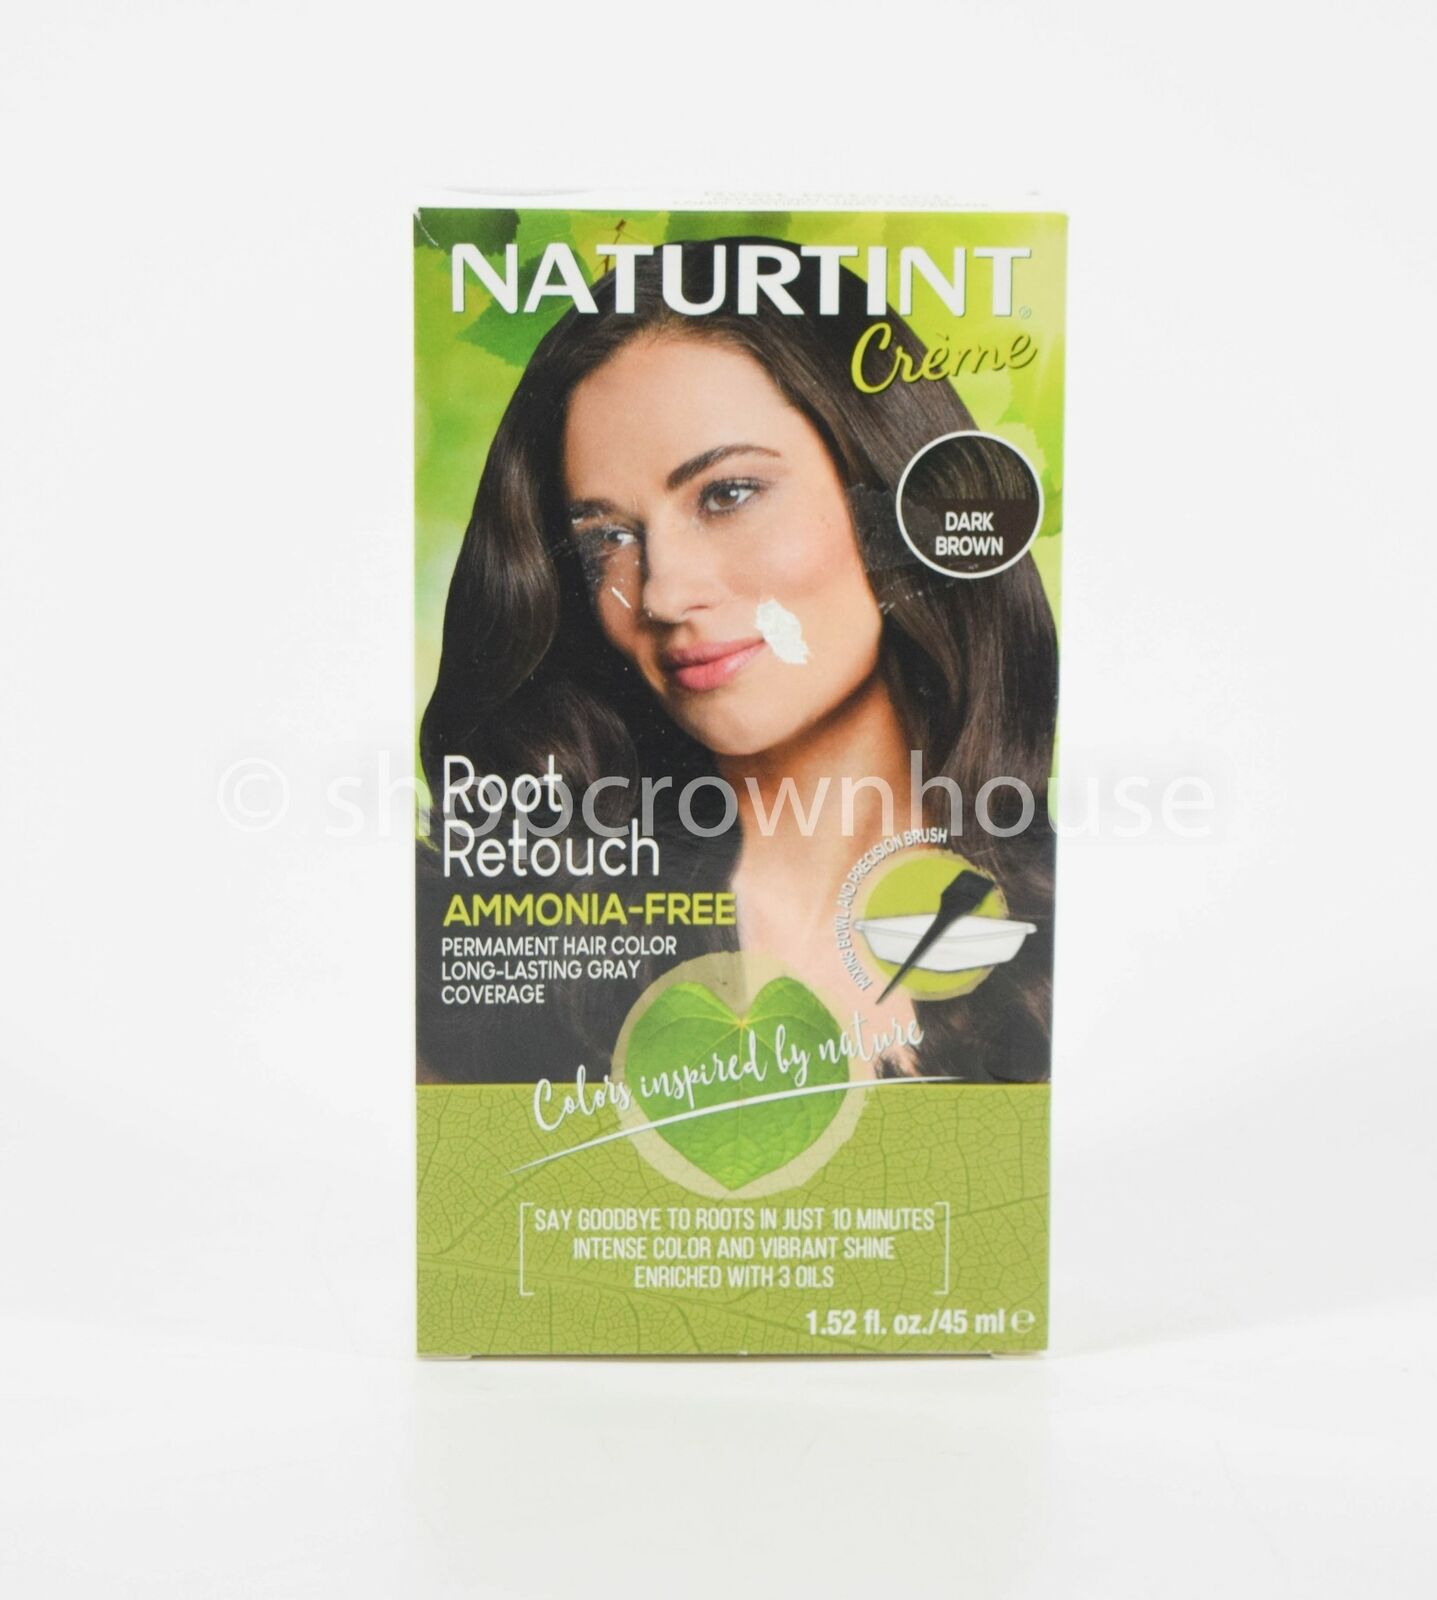 Naturtint Creme Root Retouch Ammonia Free Permament Hair Color DARK BROWN